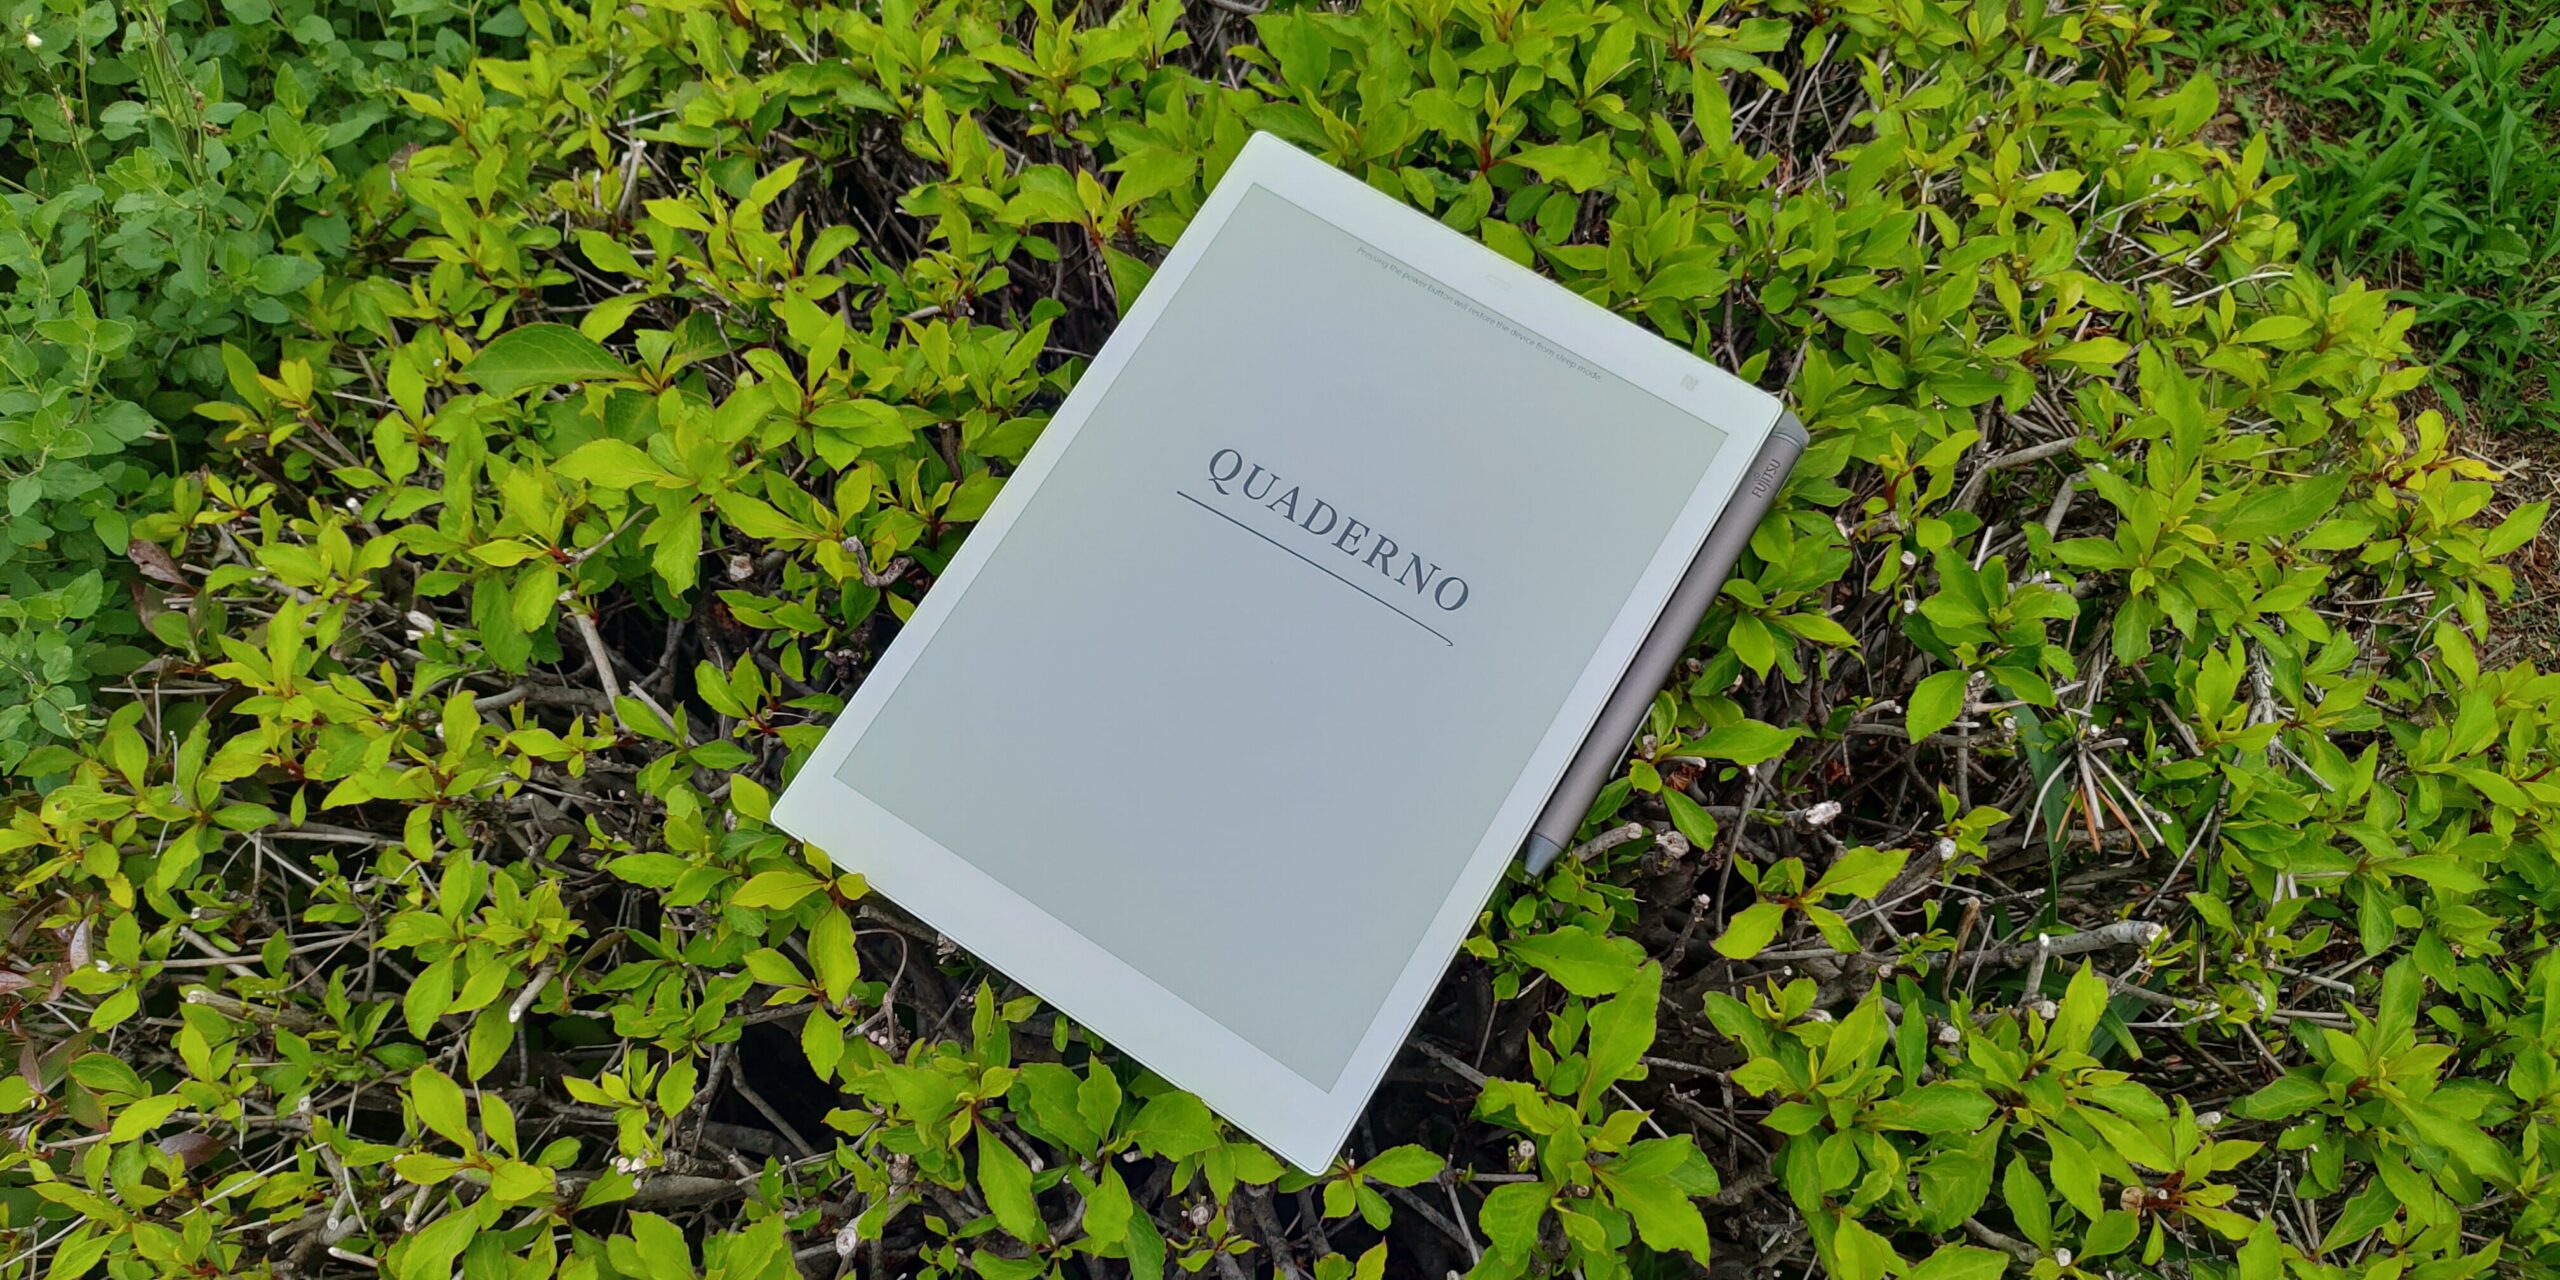 Fujitsu Quaderno A5 2nd Generation